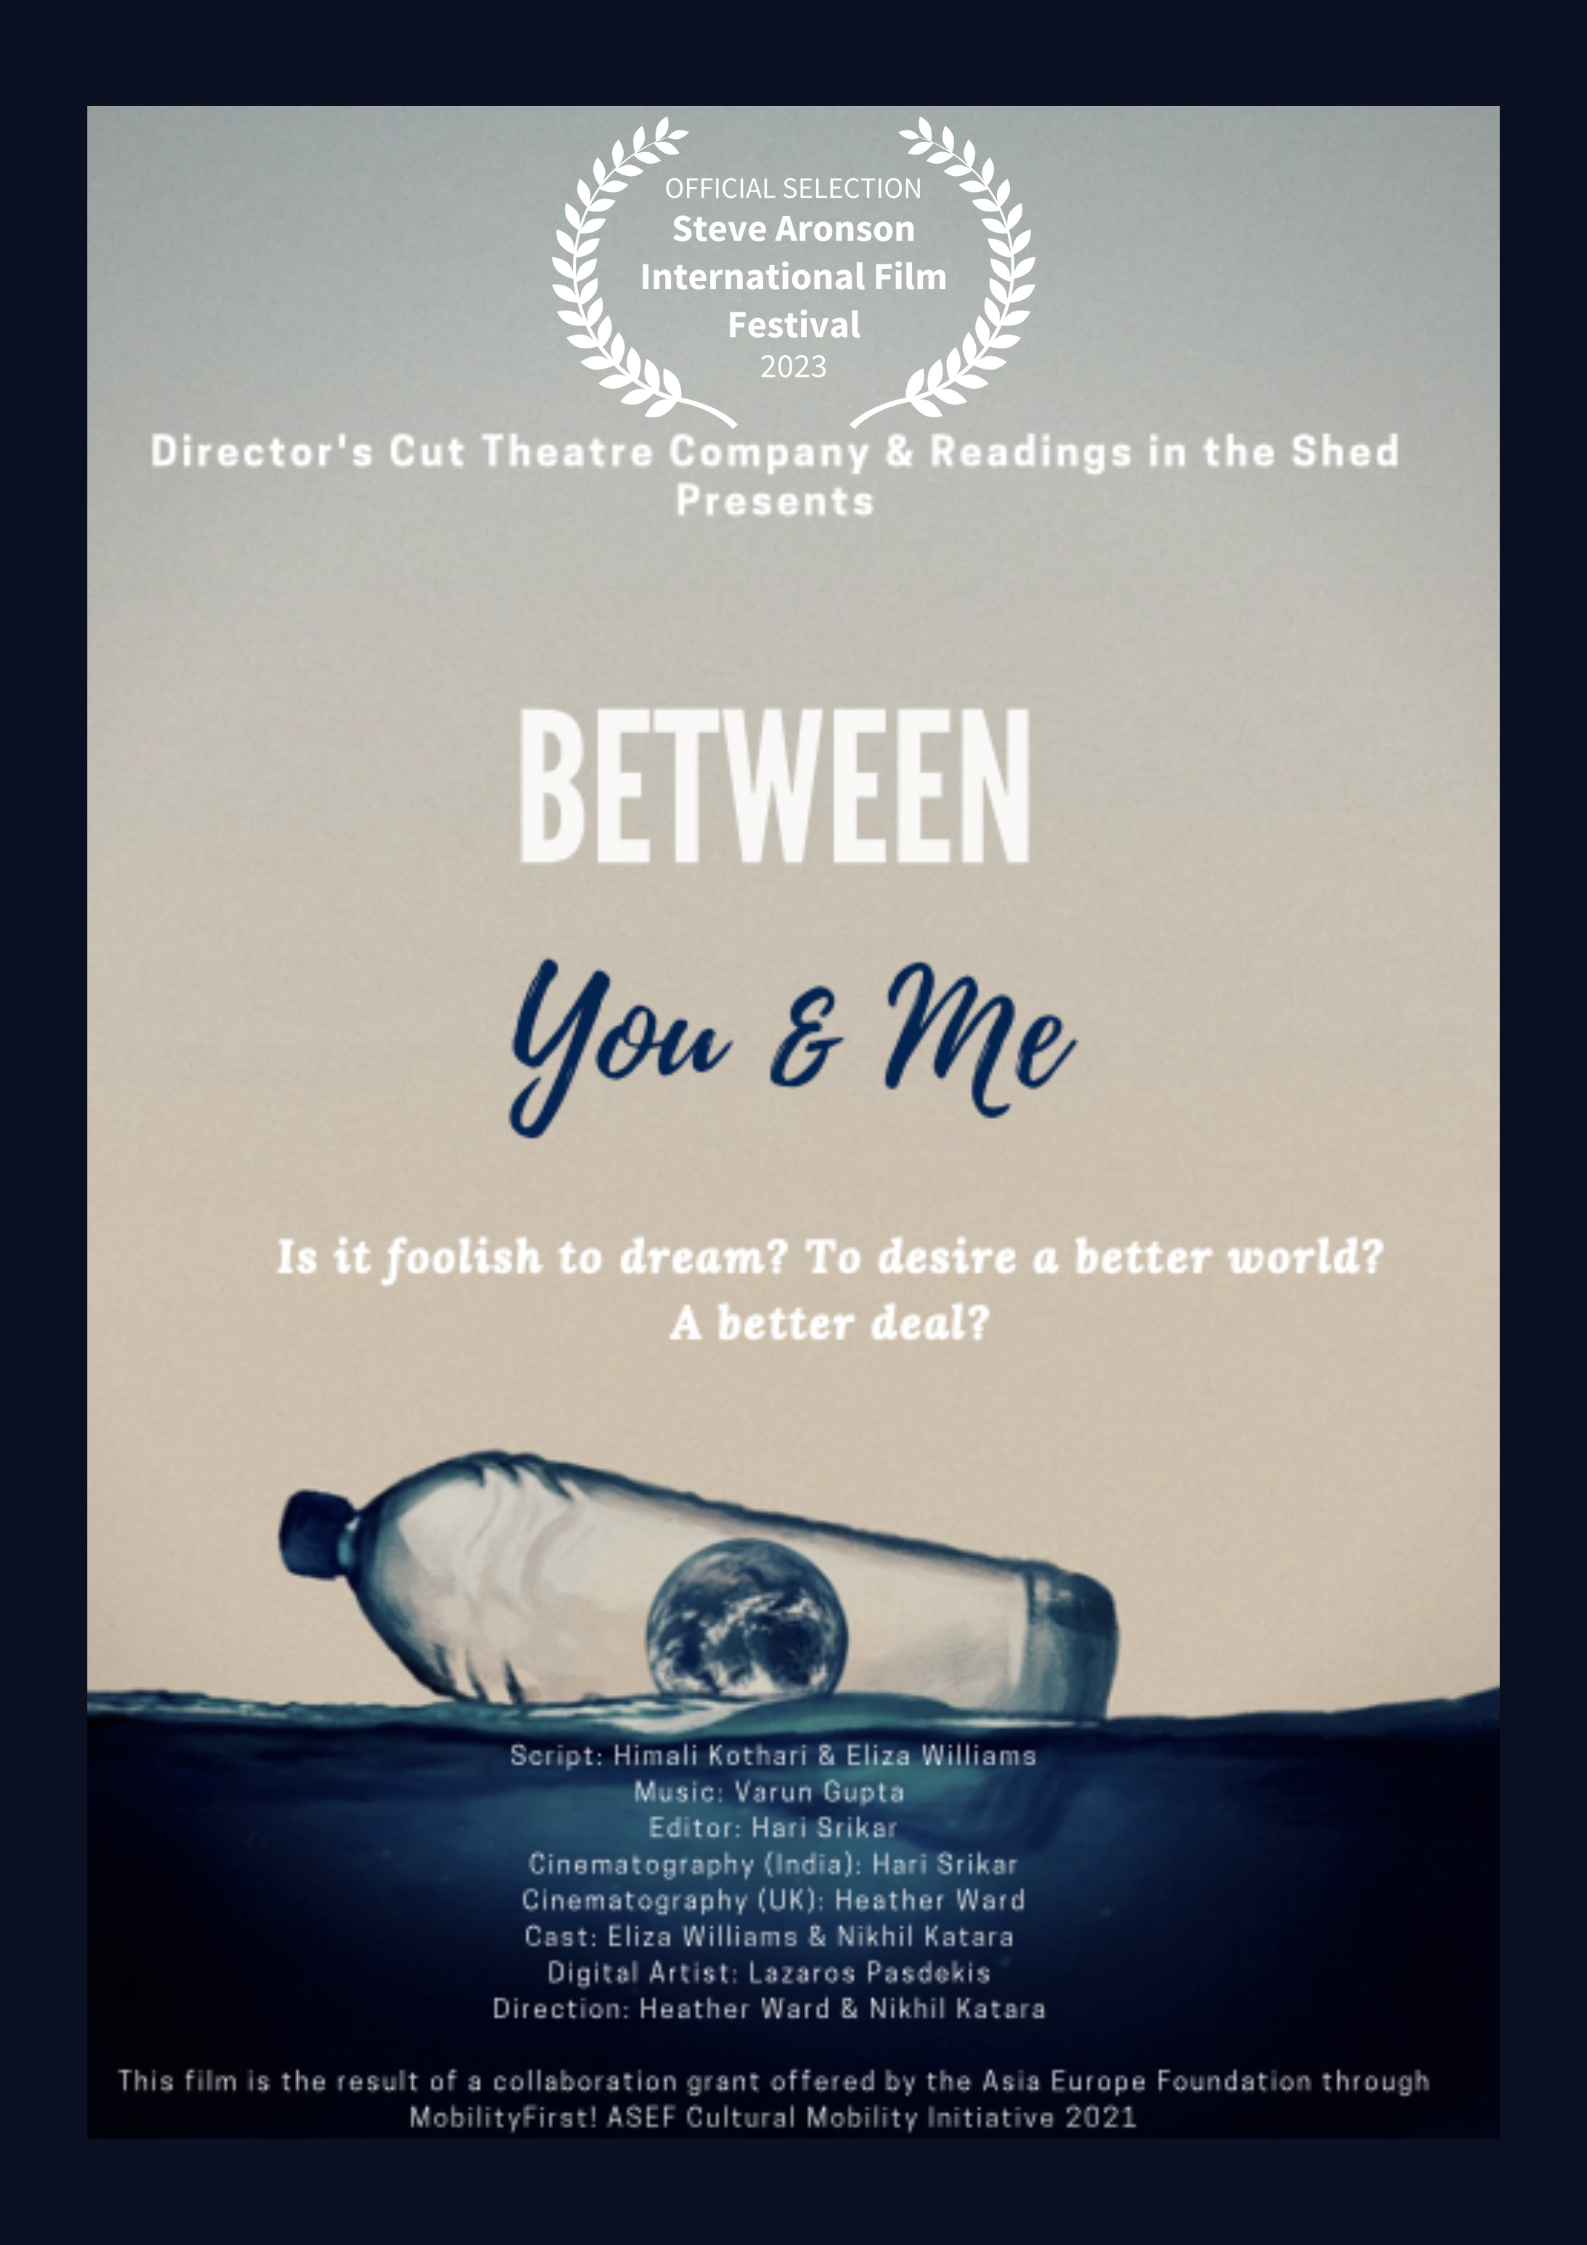 Between You & Me (Steve Aronson Film Festival)